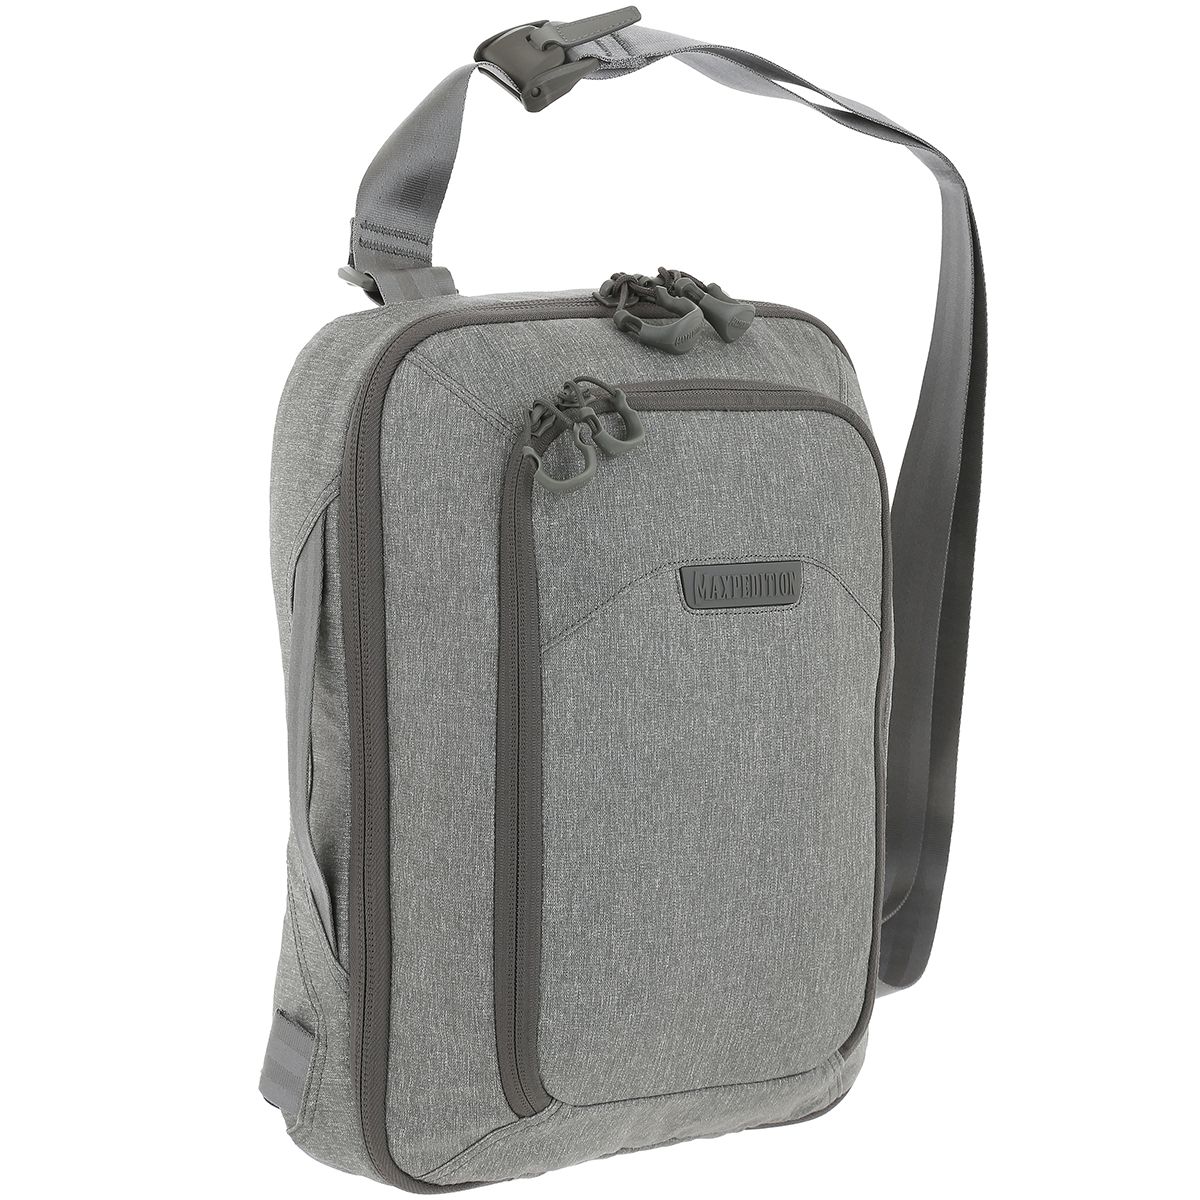 Entity Tech Sling Bag Large 10L, Tech Shoulder Bag